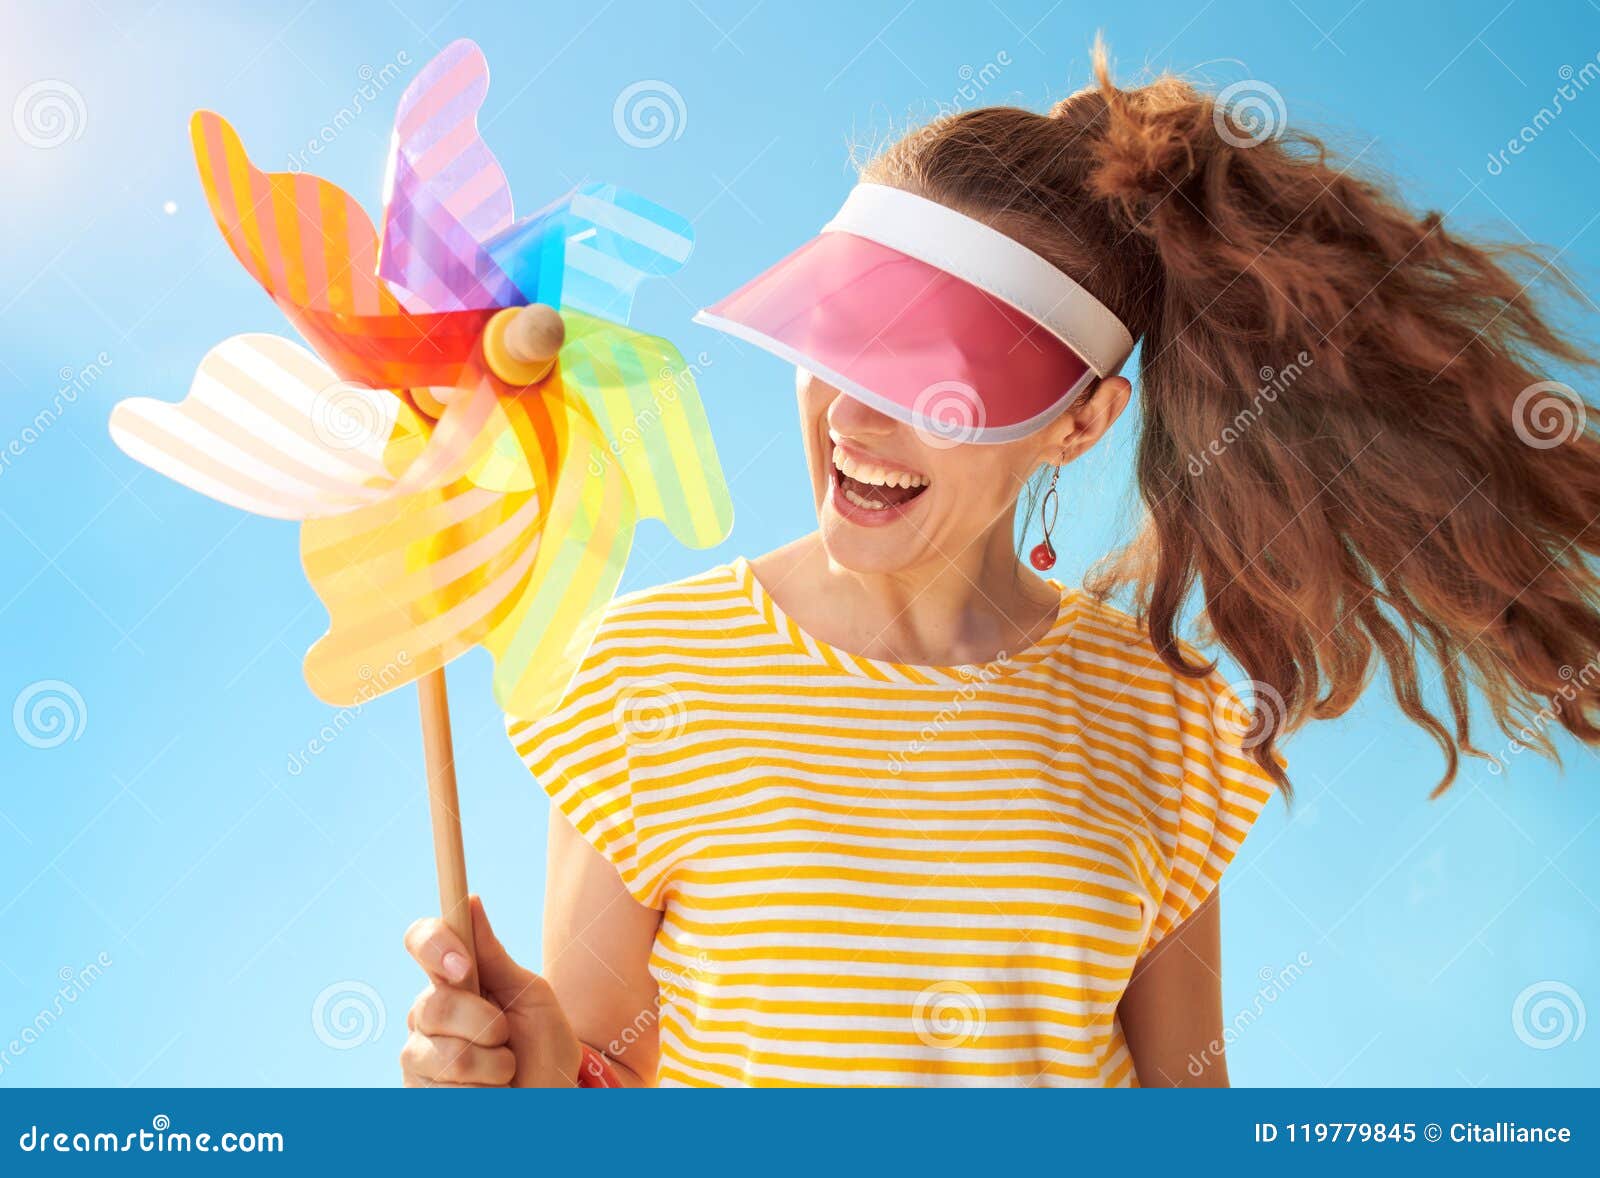 woman hiding behind sun visor holding colorful windmill